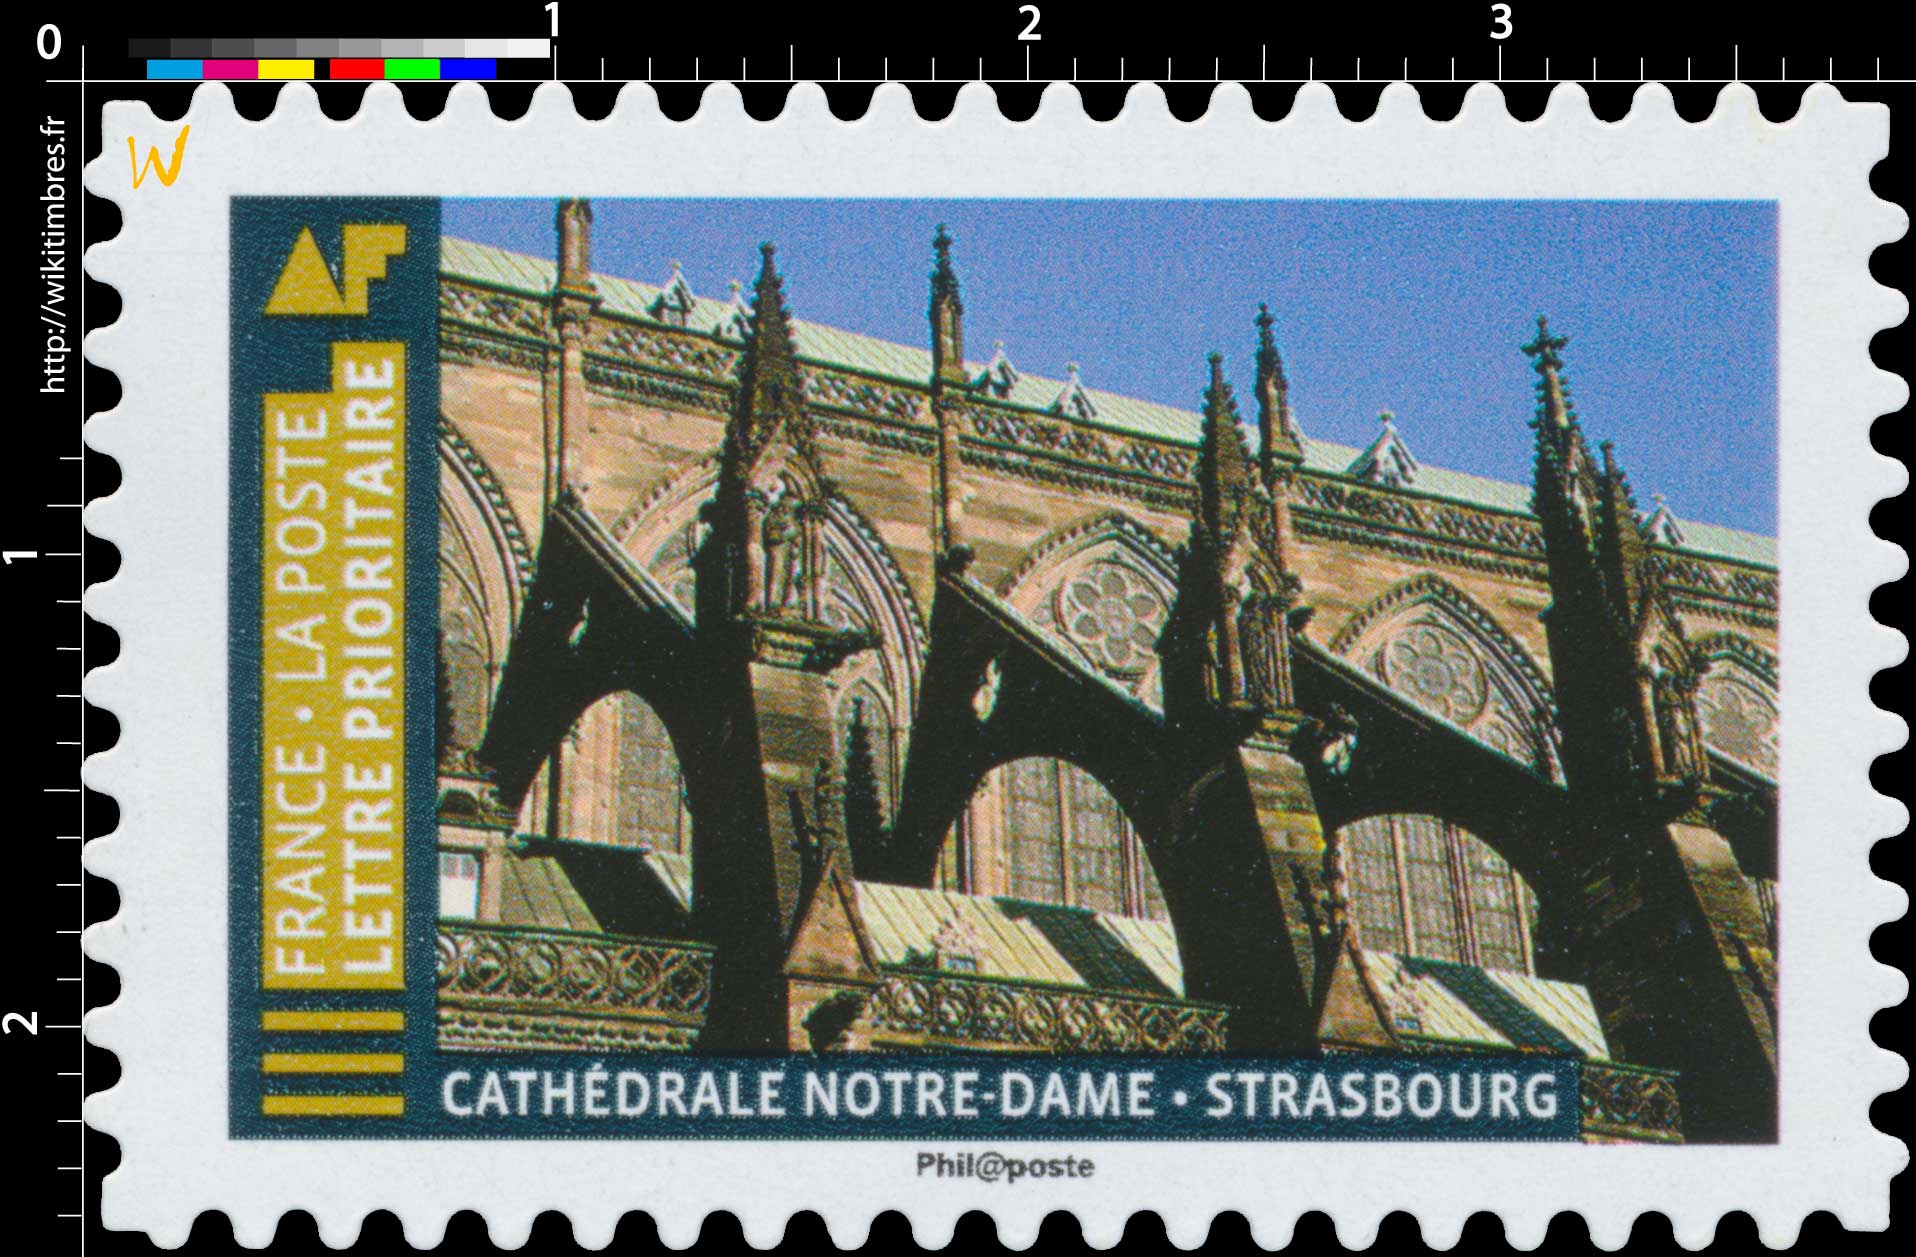 2019 Cathédrale Notre-Dame - Strasbourg 